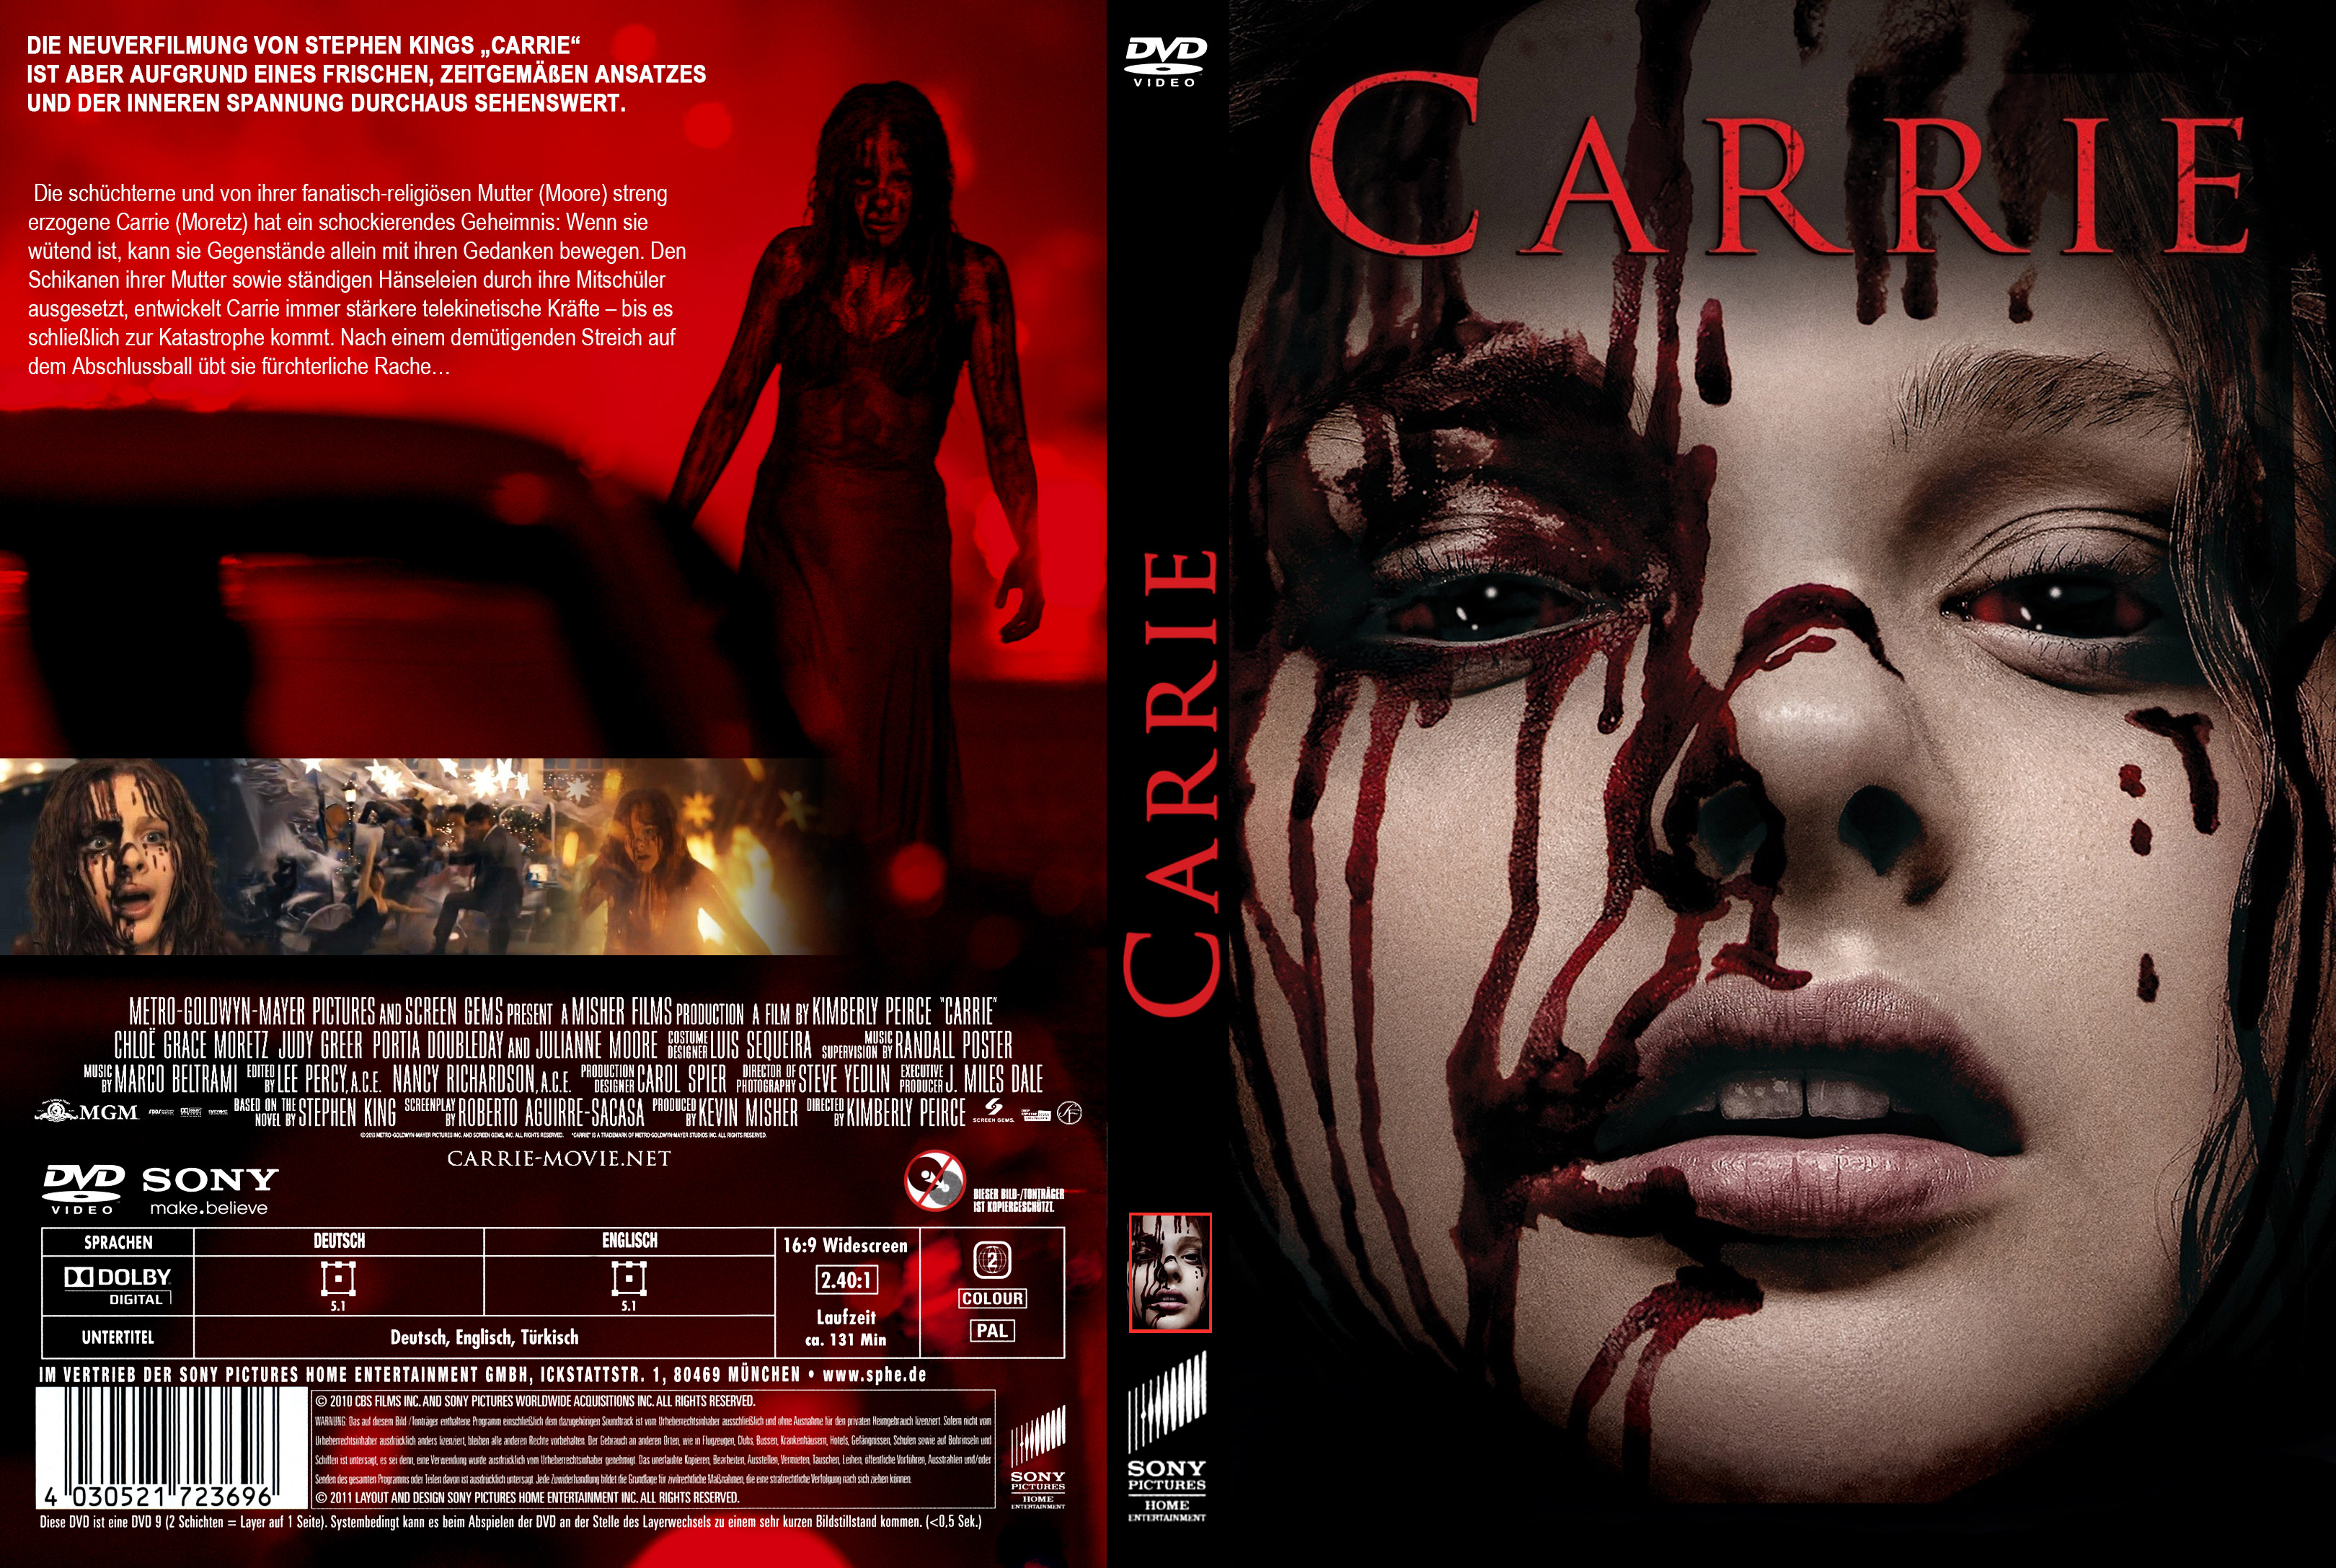 Stephen Kings Carrie Remake Cover deutsch DVD.